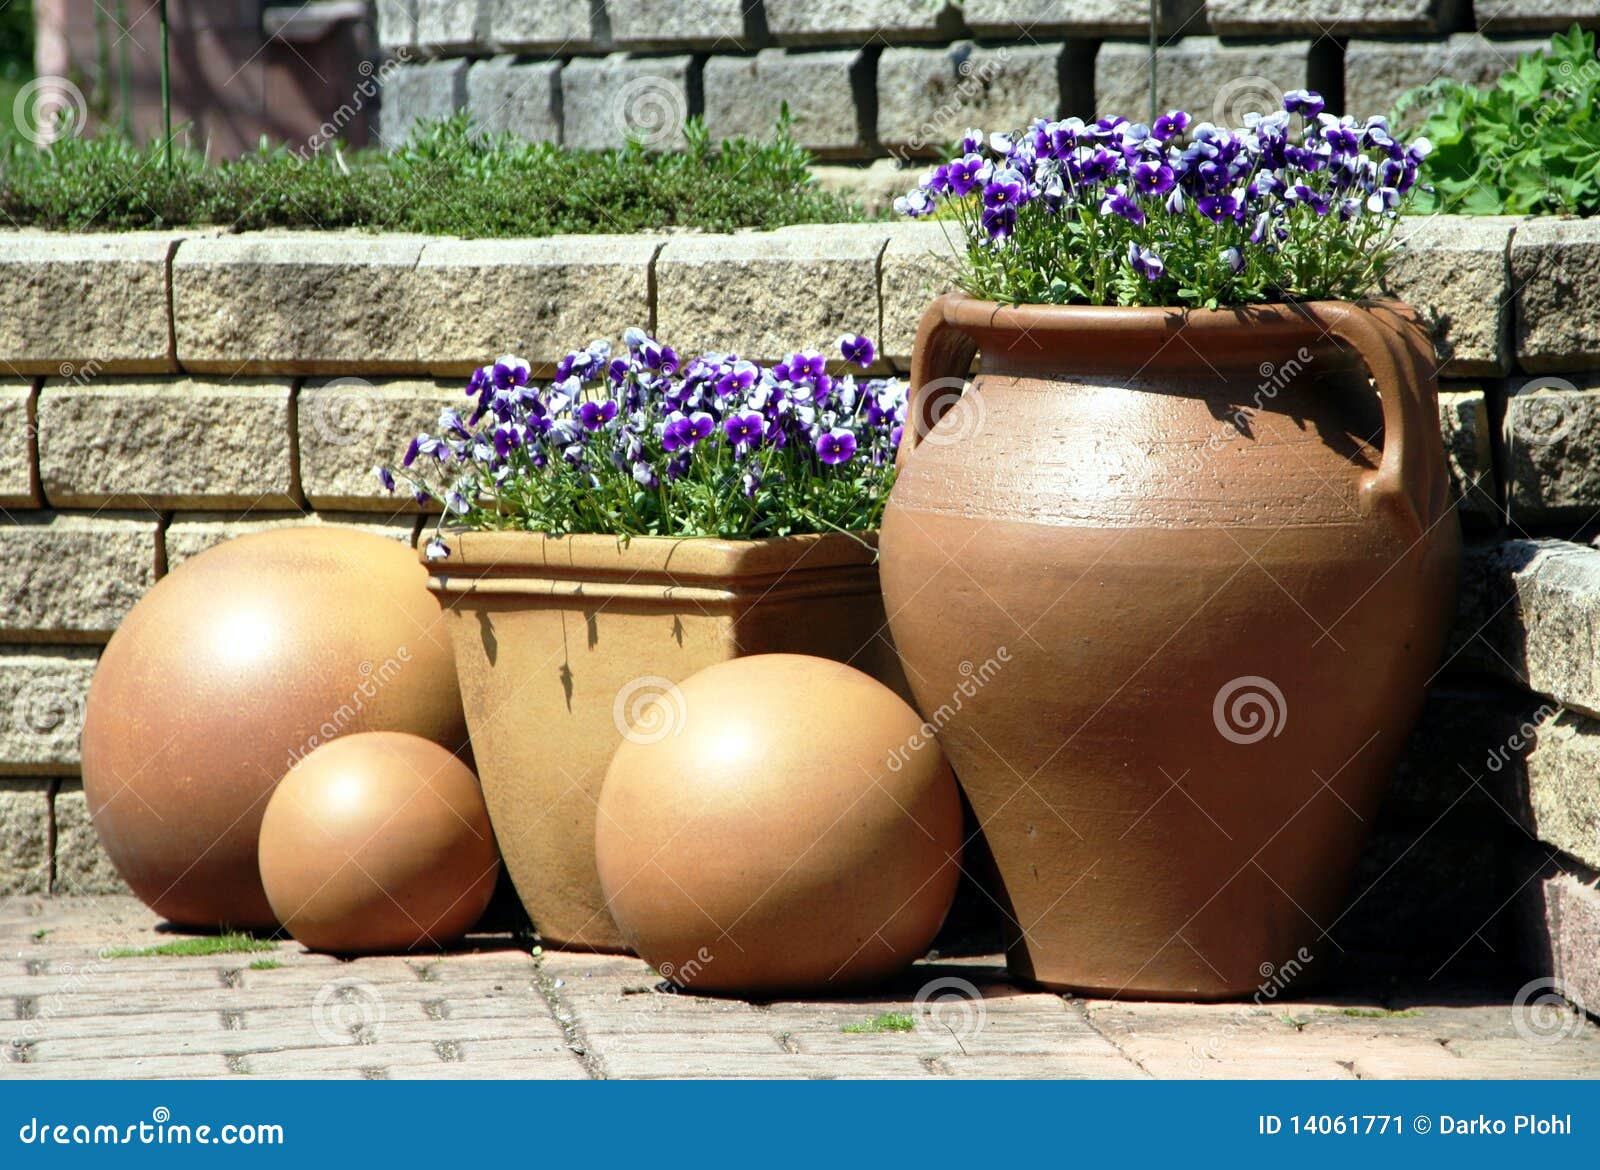 ceramics pot with pansy viola plants